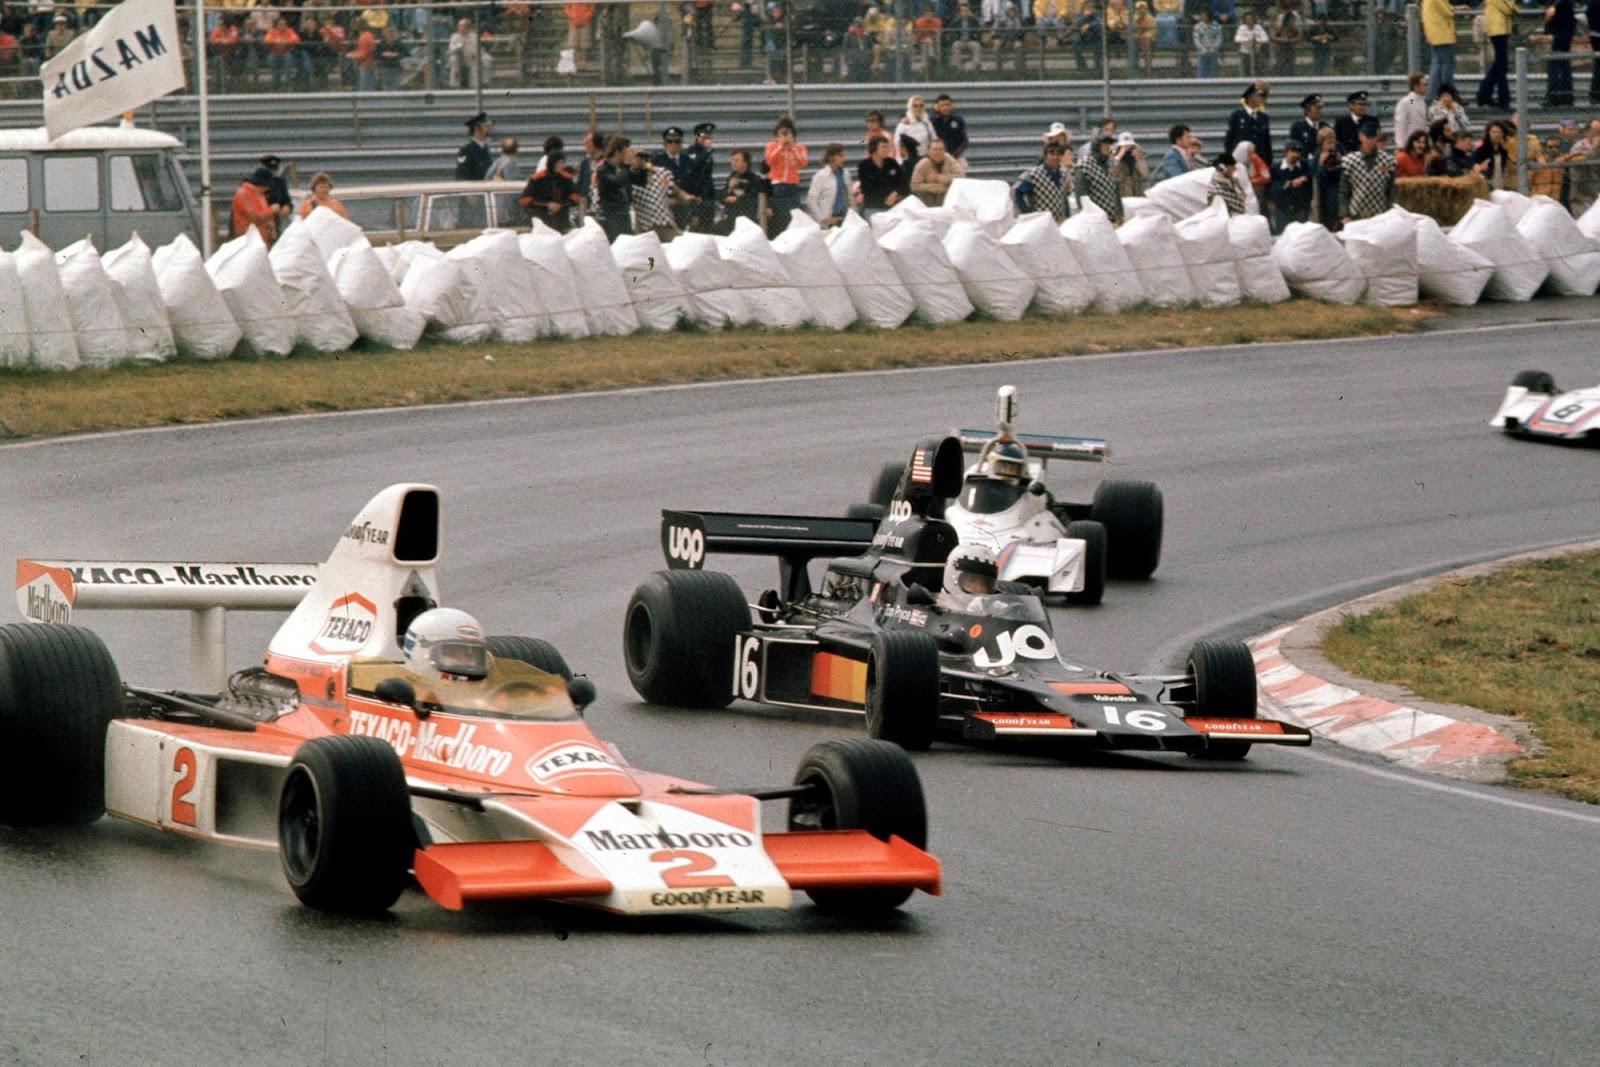 Hunt, Lauda and Pryce at the 1975 Dutch Grand Prix.